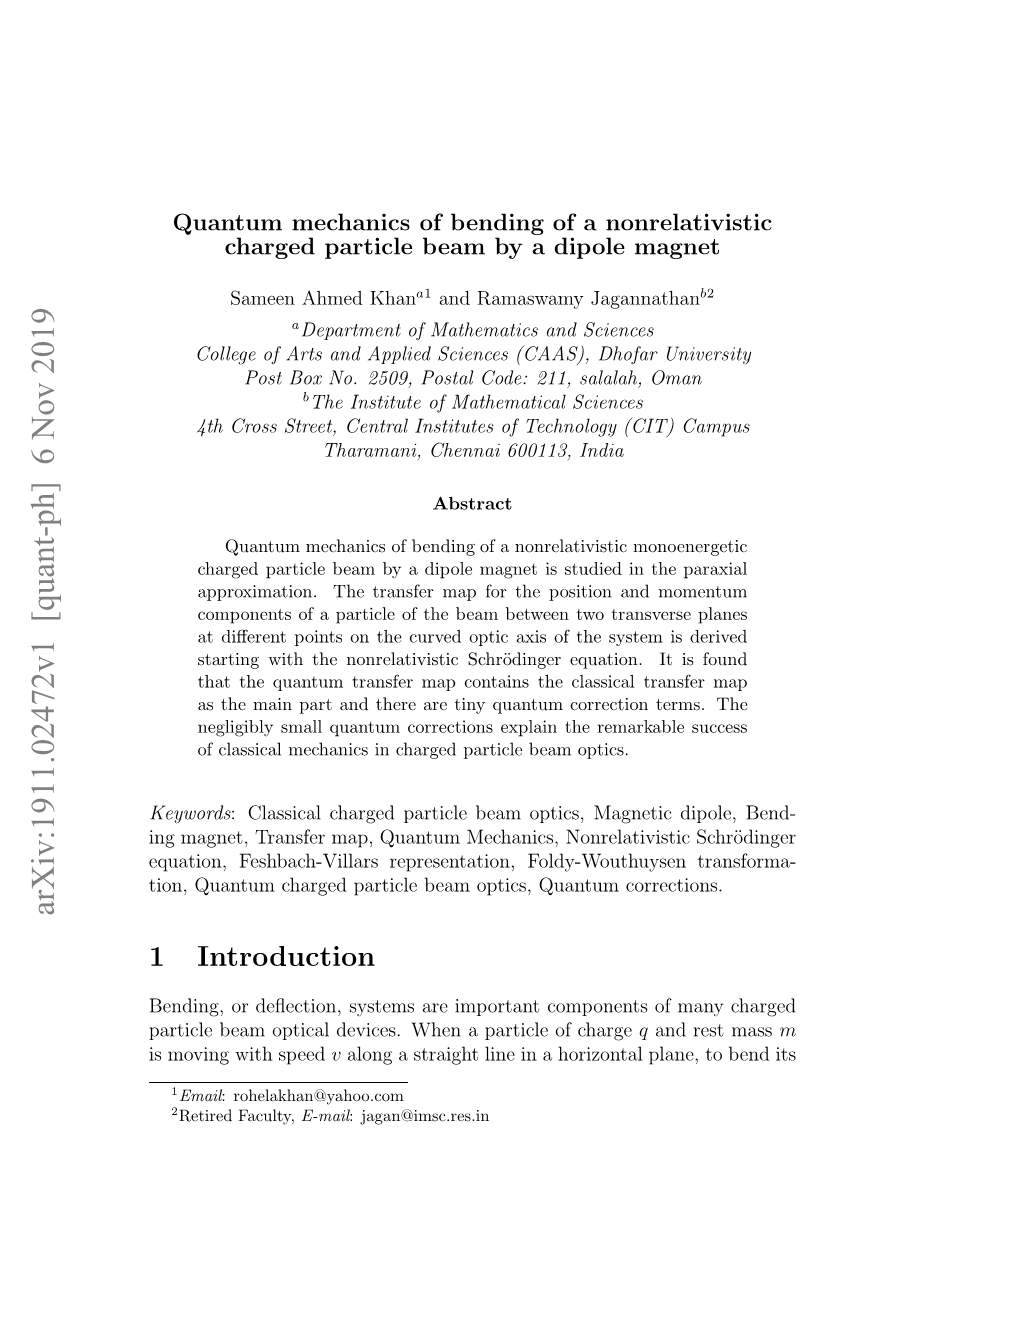 Quantum Mechanics of Bending of a Nonrelativistic Charged Particle